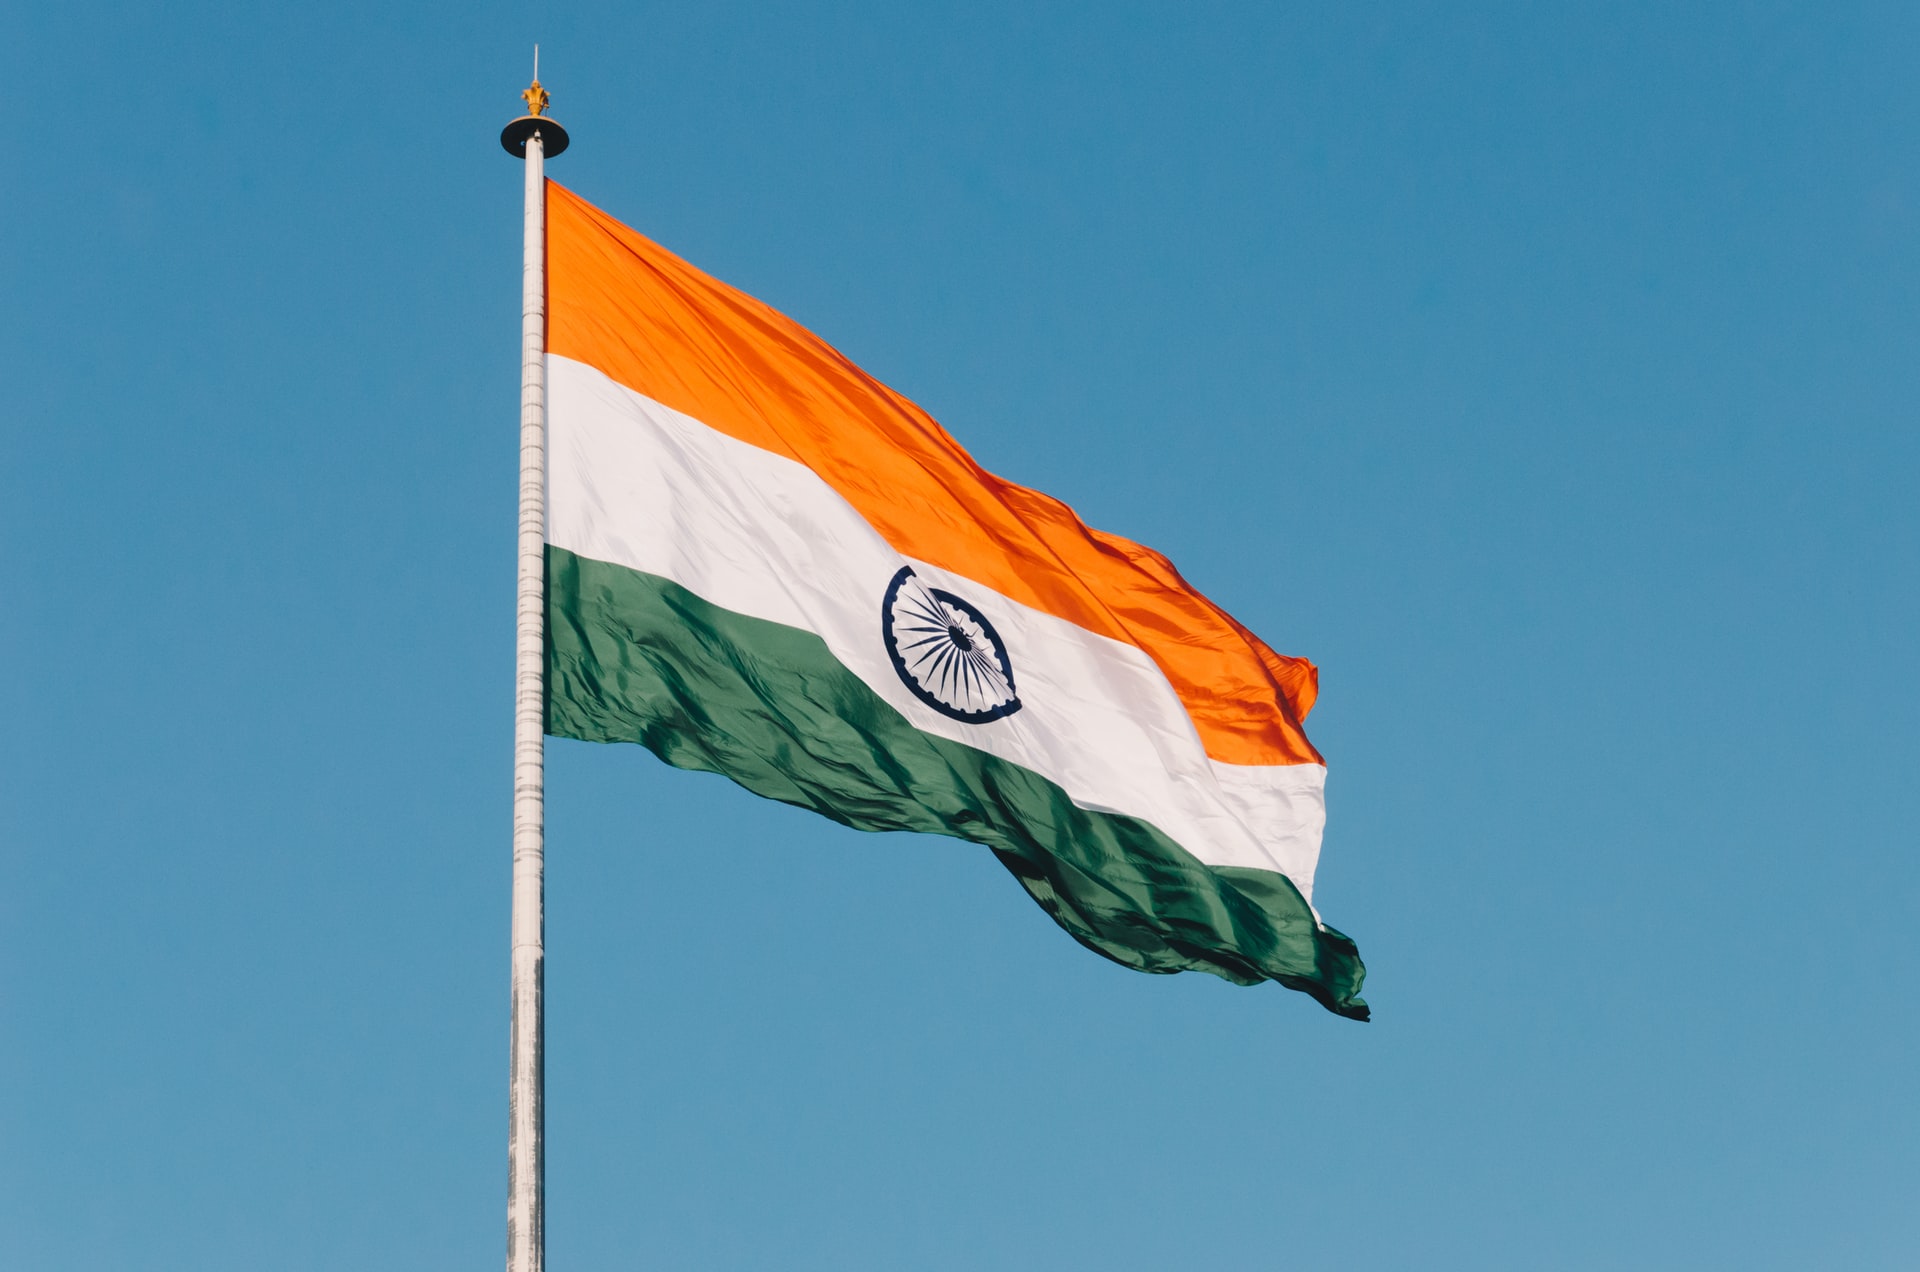 India နိုင်ငံက စမတ်ဖုန်းထုတ်လုပ်သူများနဲ့ စမတ်ဖုန်းအစိတ်အပိုင်းထုတ်လုပ်သူများကို incentive များပေးကာ ဒေသတွင်း ကုန်ထုတ်လုပ်မှုမြင့်မားလာစေရန်ဆောင်ရွက်လျှက်ရှိနေ 